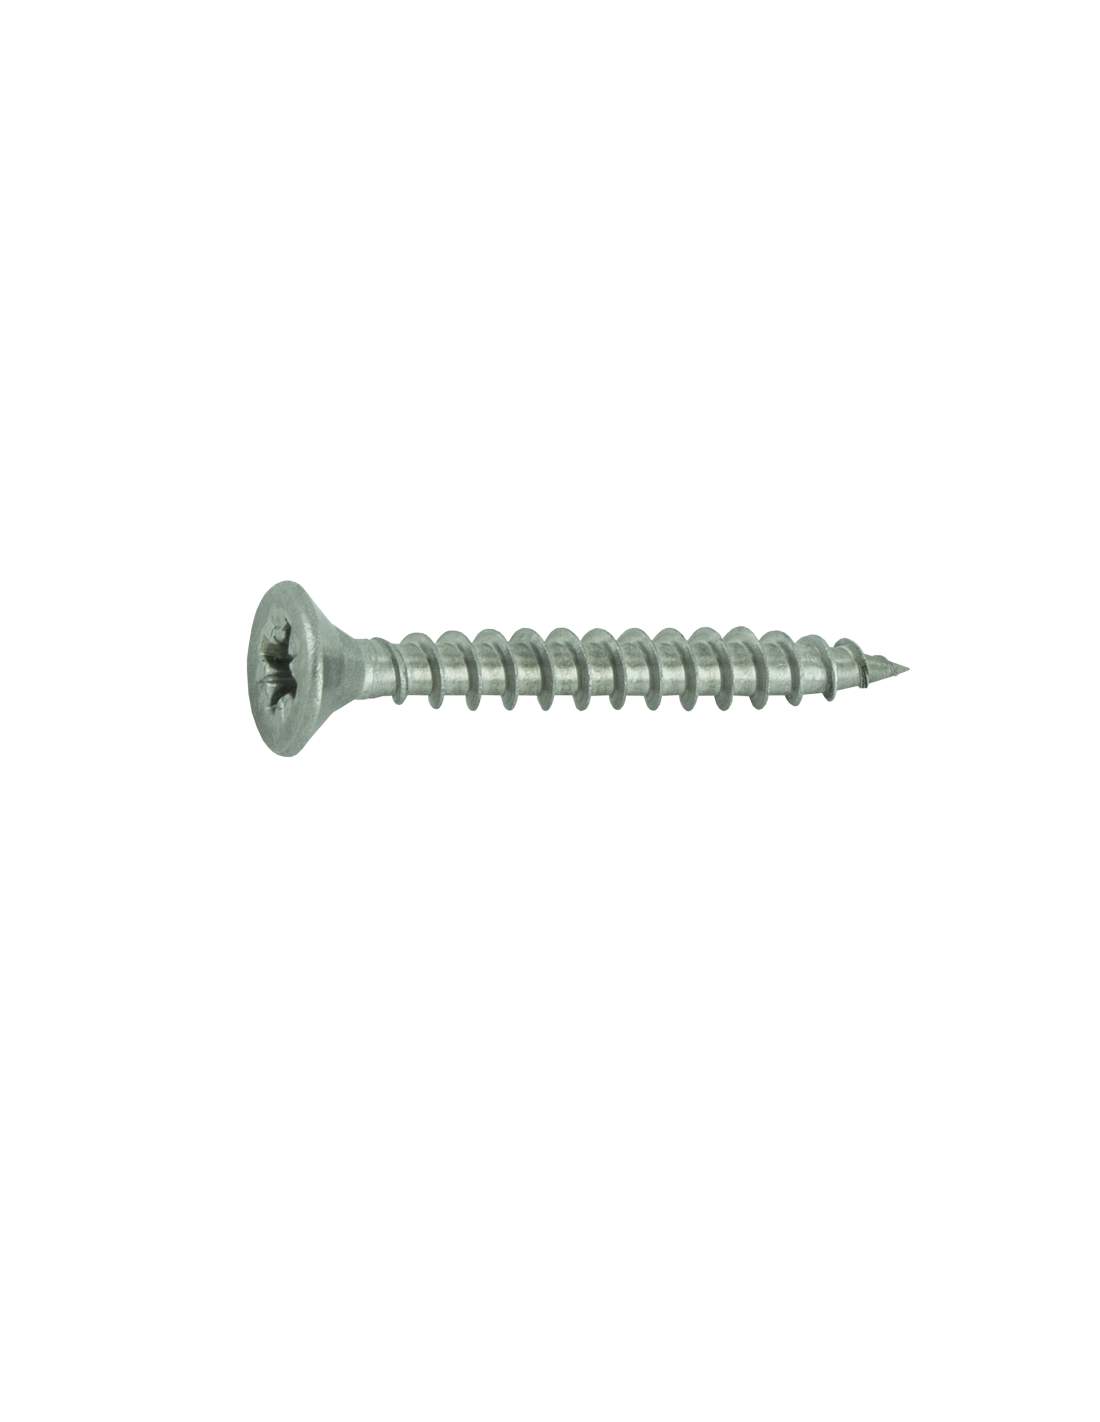 Stainless steel Pozidriv countersunk head screws A2 6x60, 6 pcs.